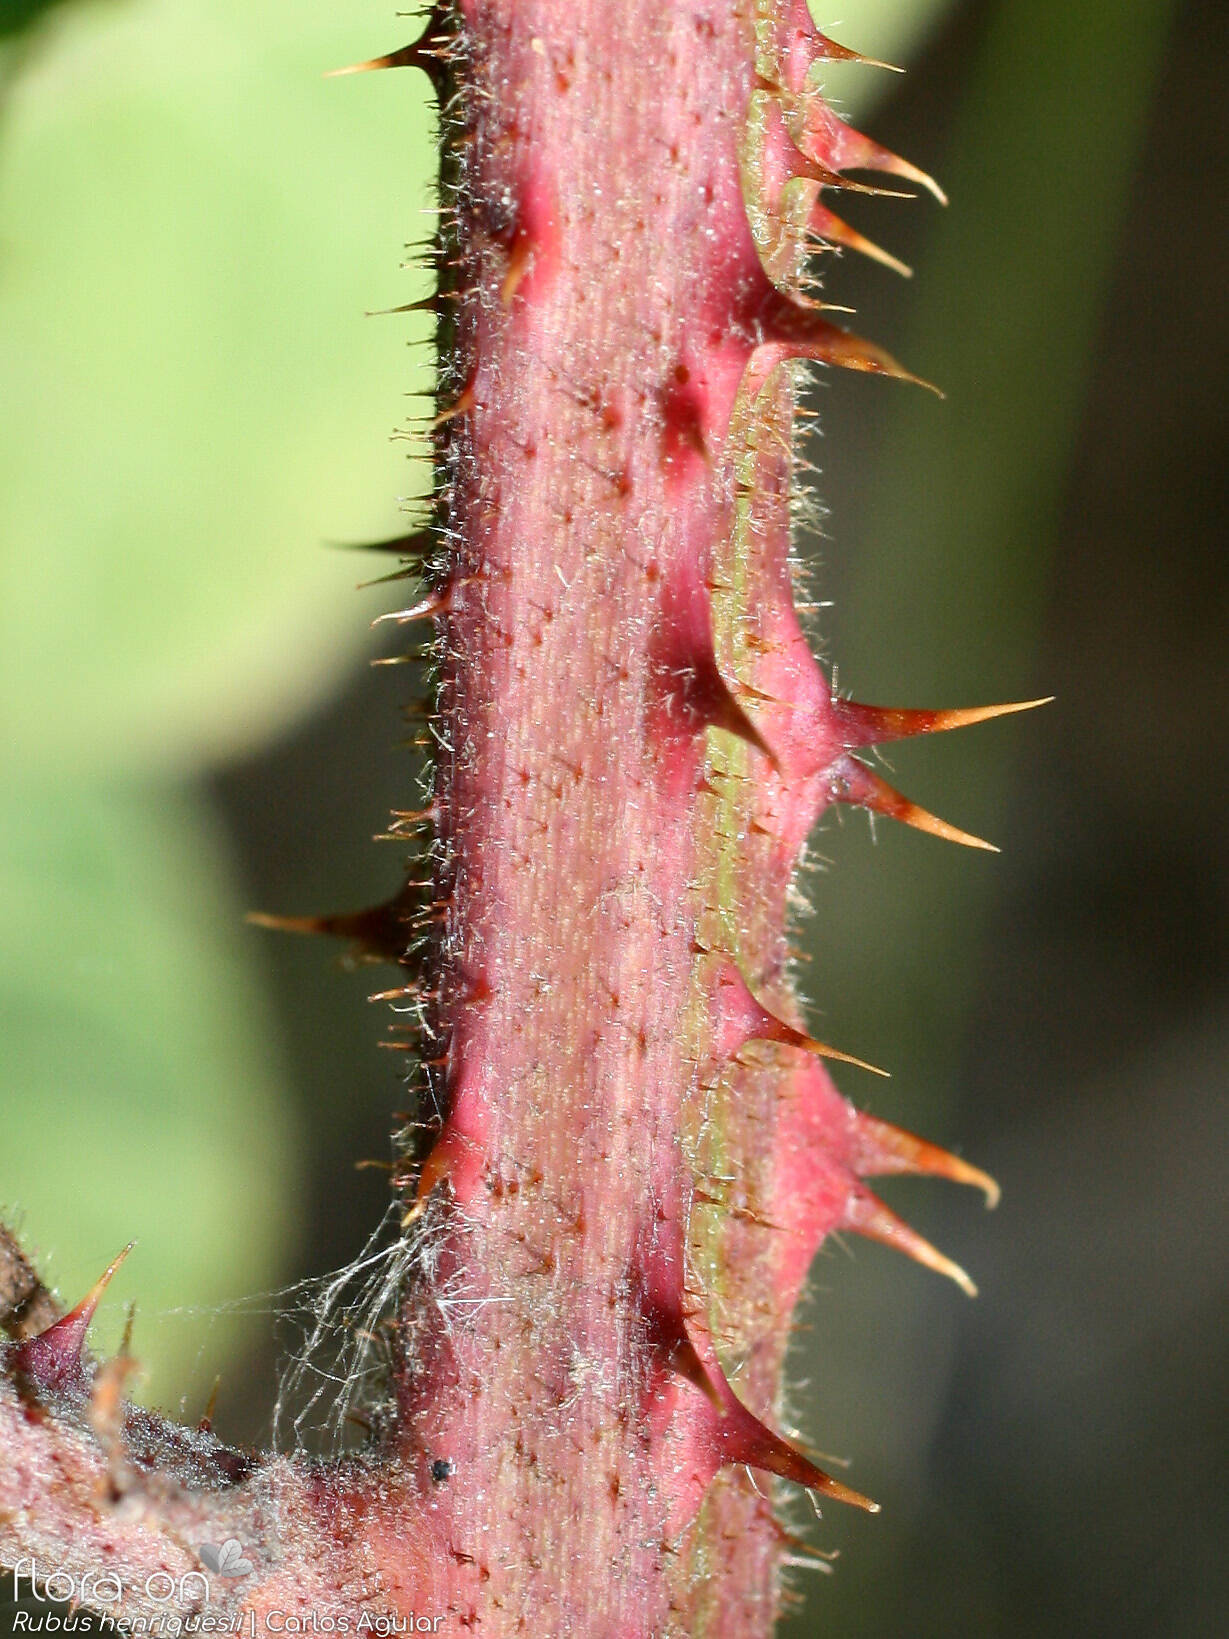 Rubus henriquesii - Caule | Carlos Aguiar; CC BY-NC 4.0